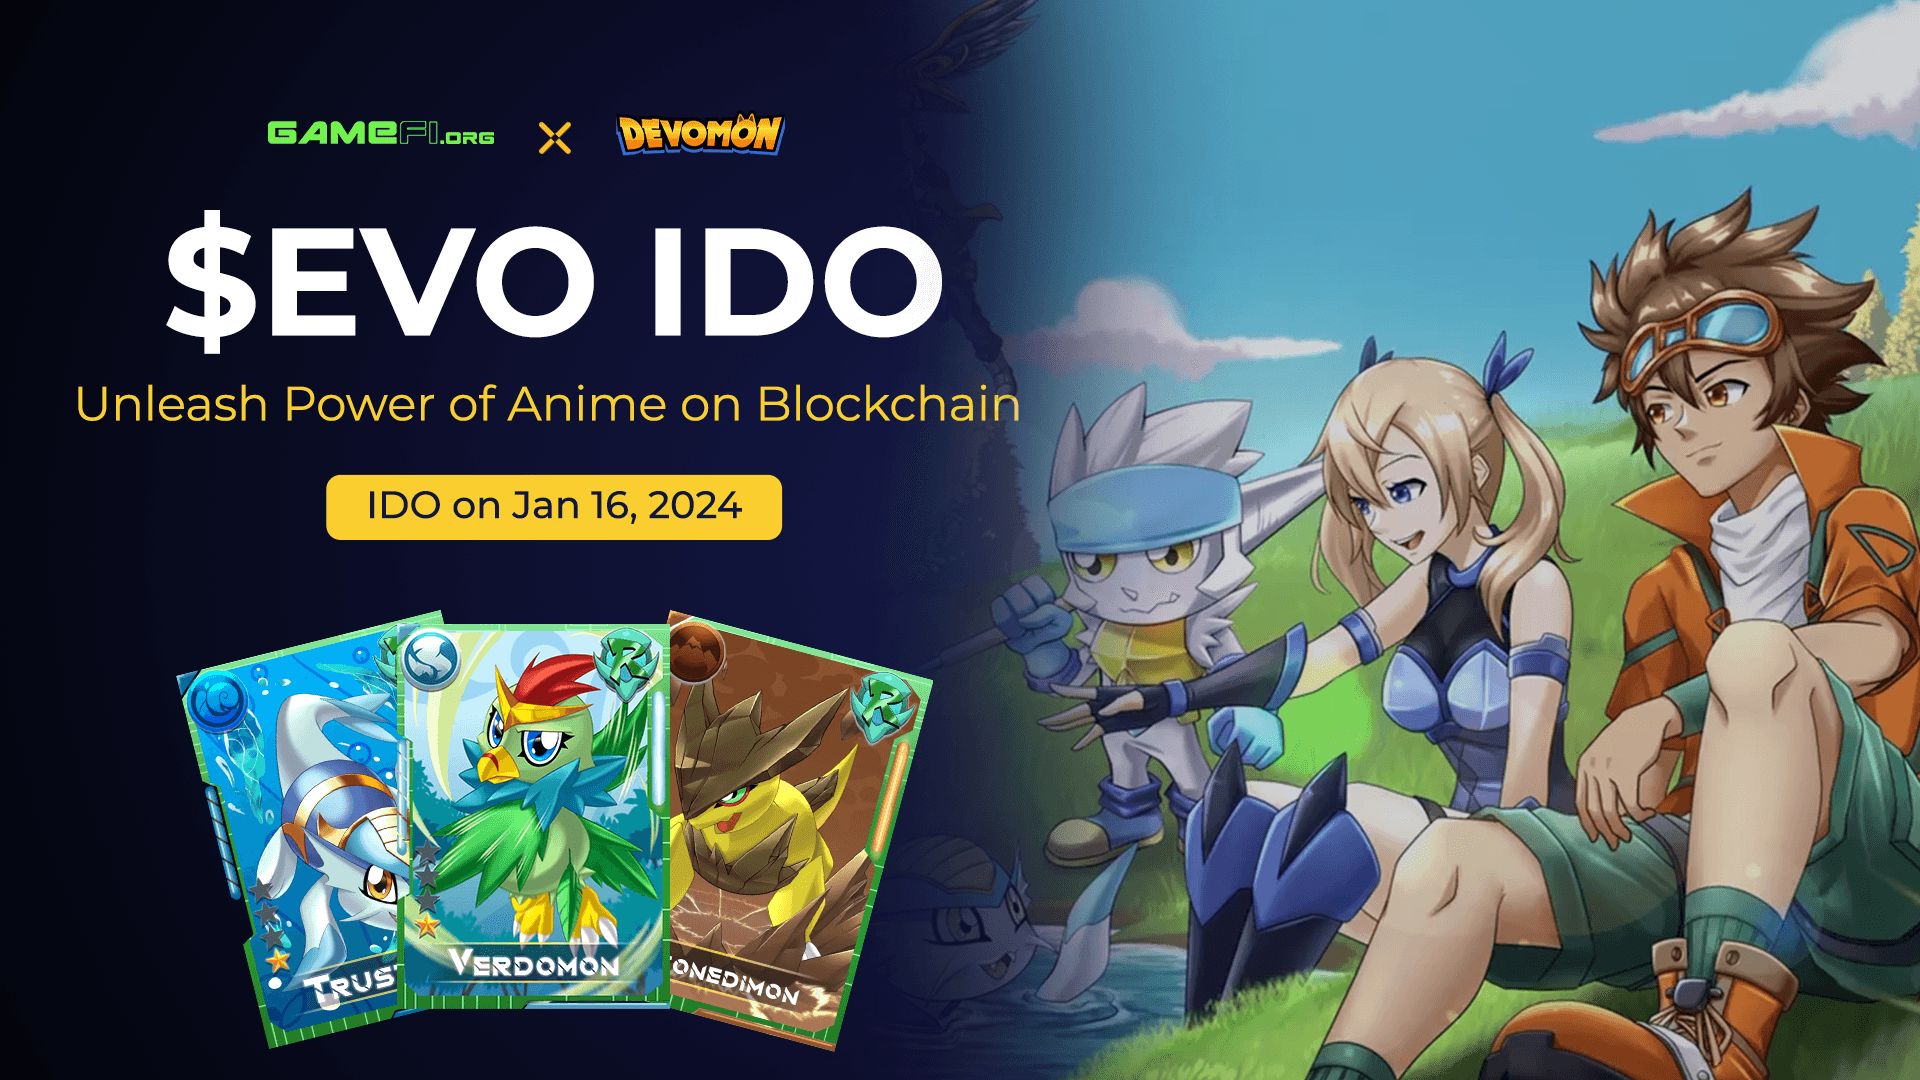 DEVOMON Unleashes Power of Anime on Blockchain - $300,000 $EVO IDO on the run!